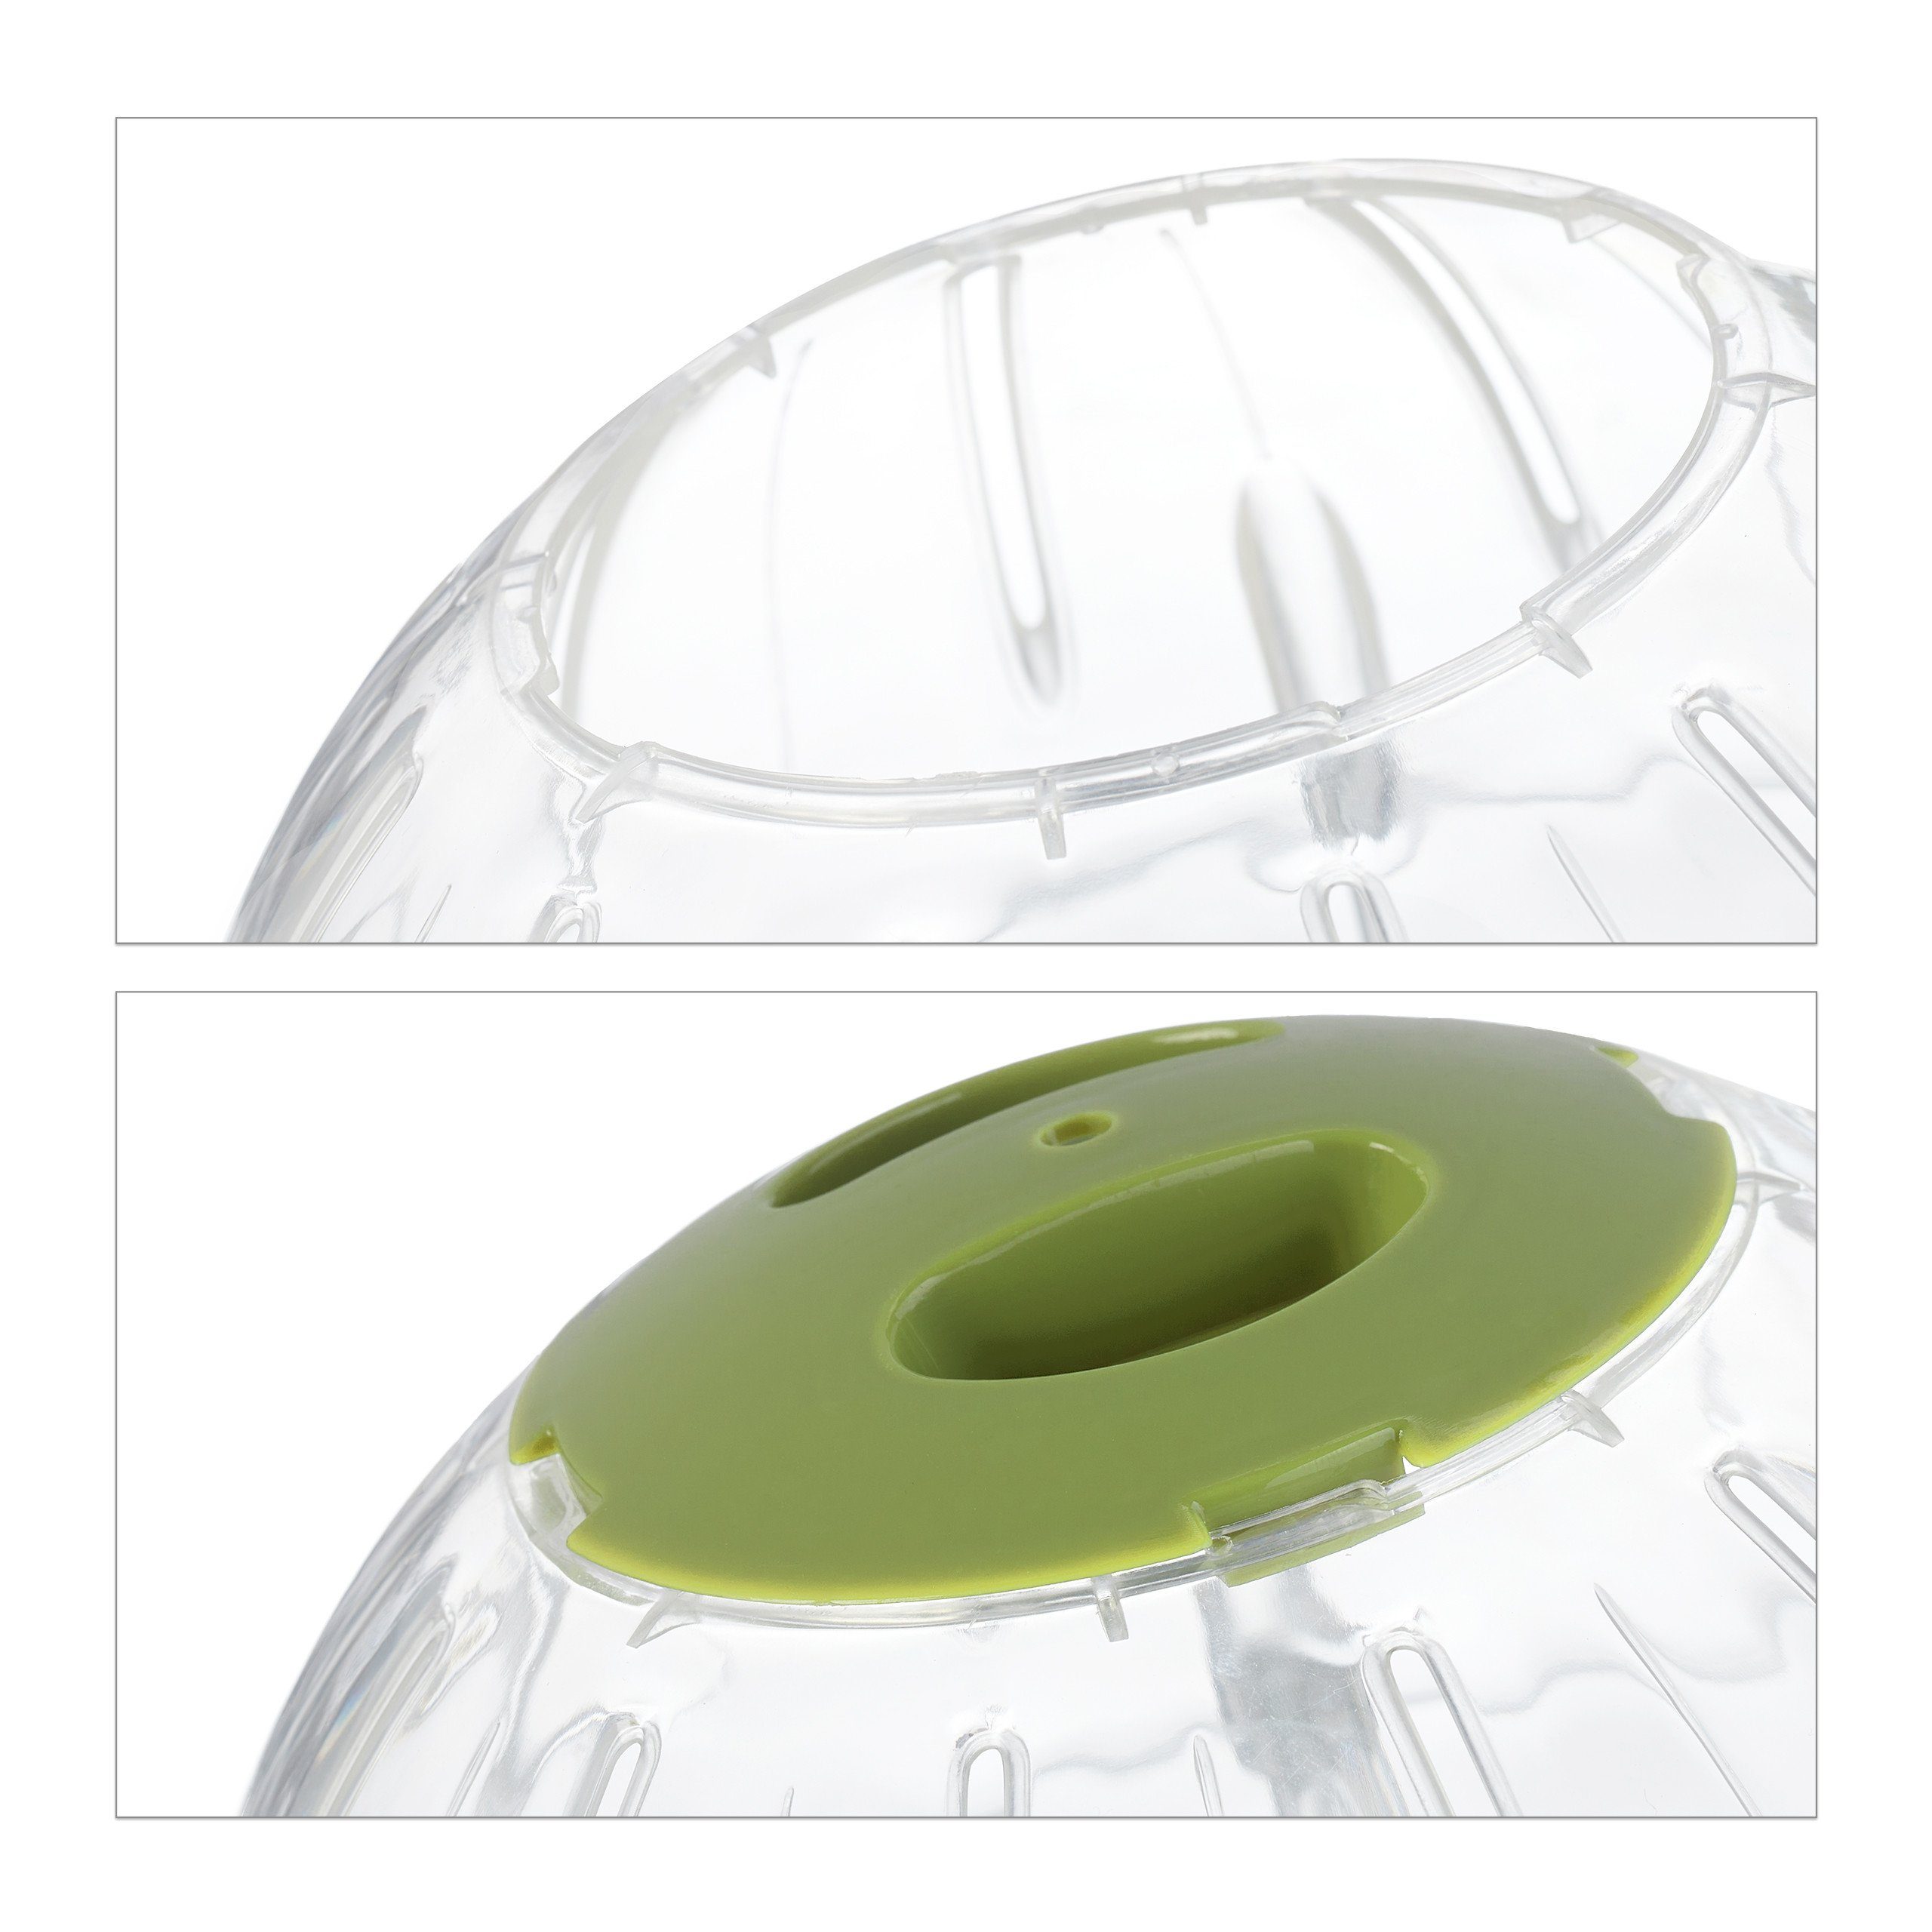 Deckel, relaxdays mit grünem Hamsterball Tierball Kunststoff